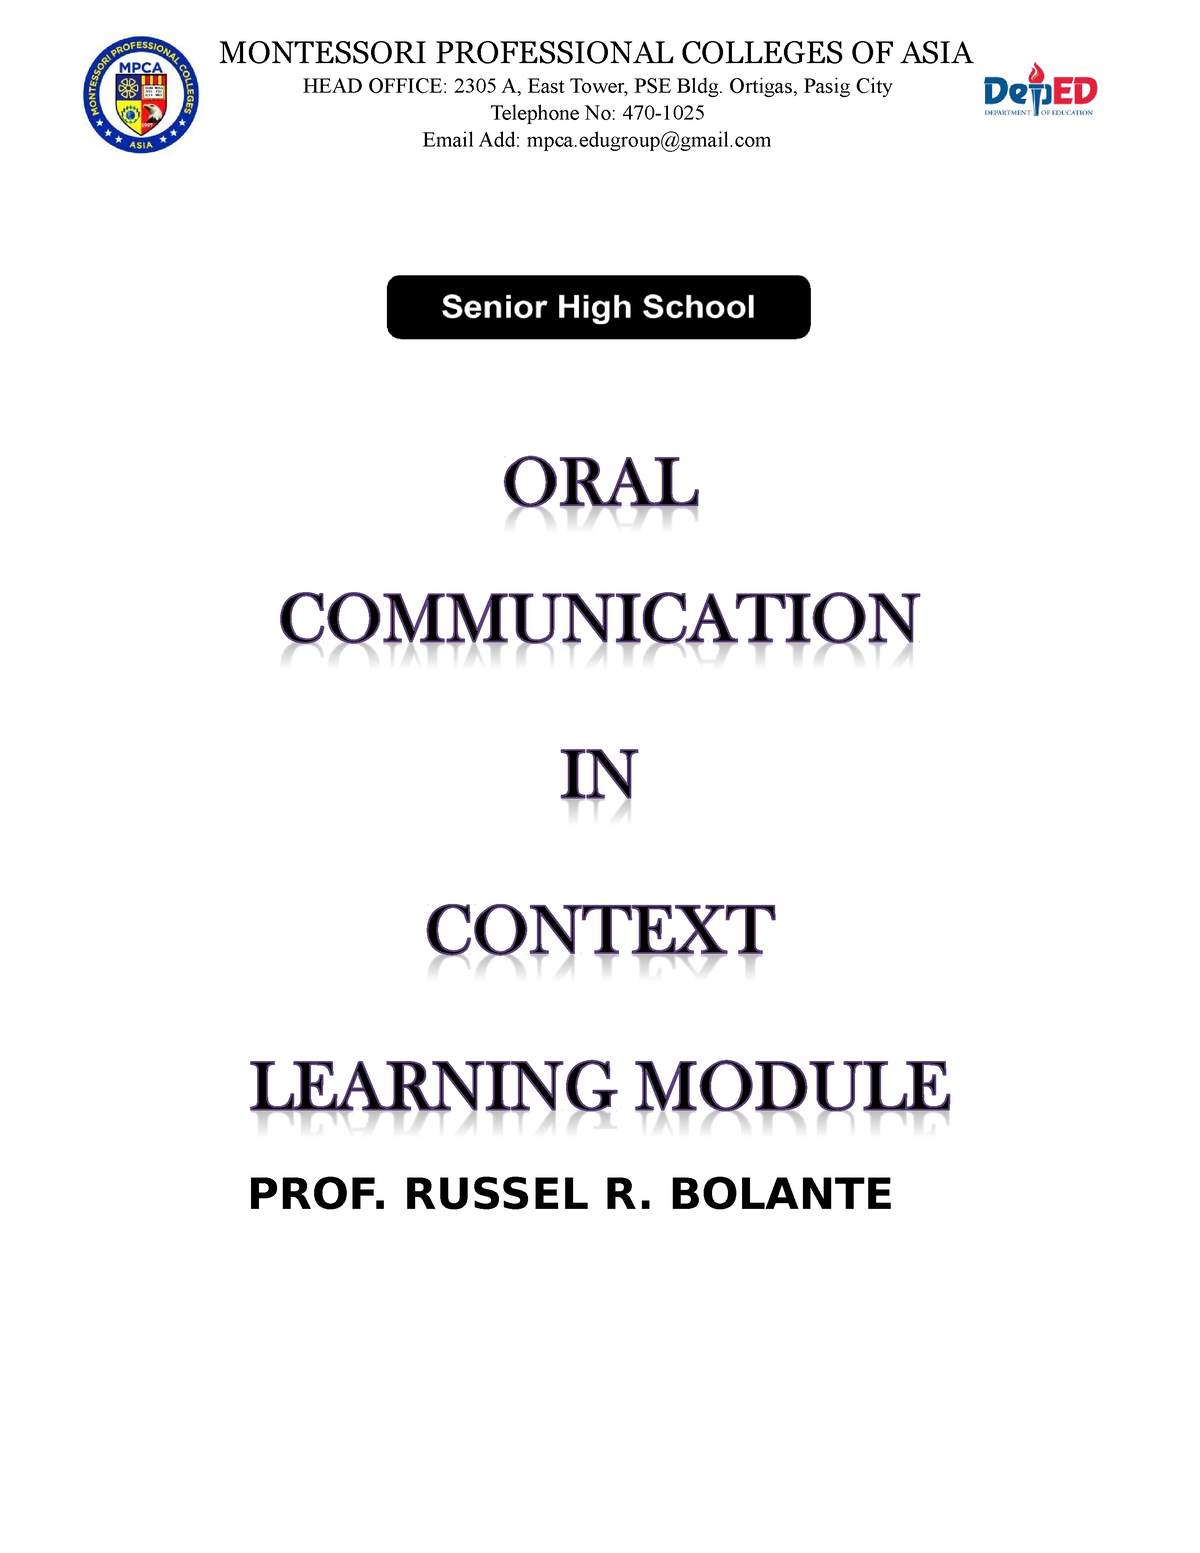 oral communication grade 11 essay